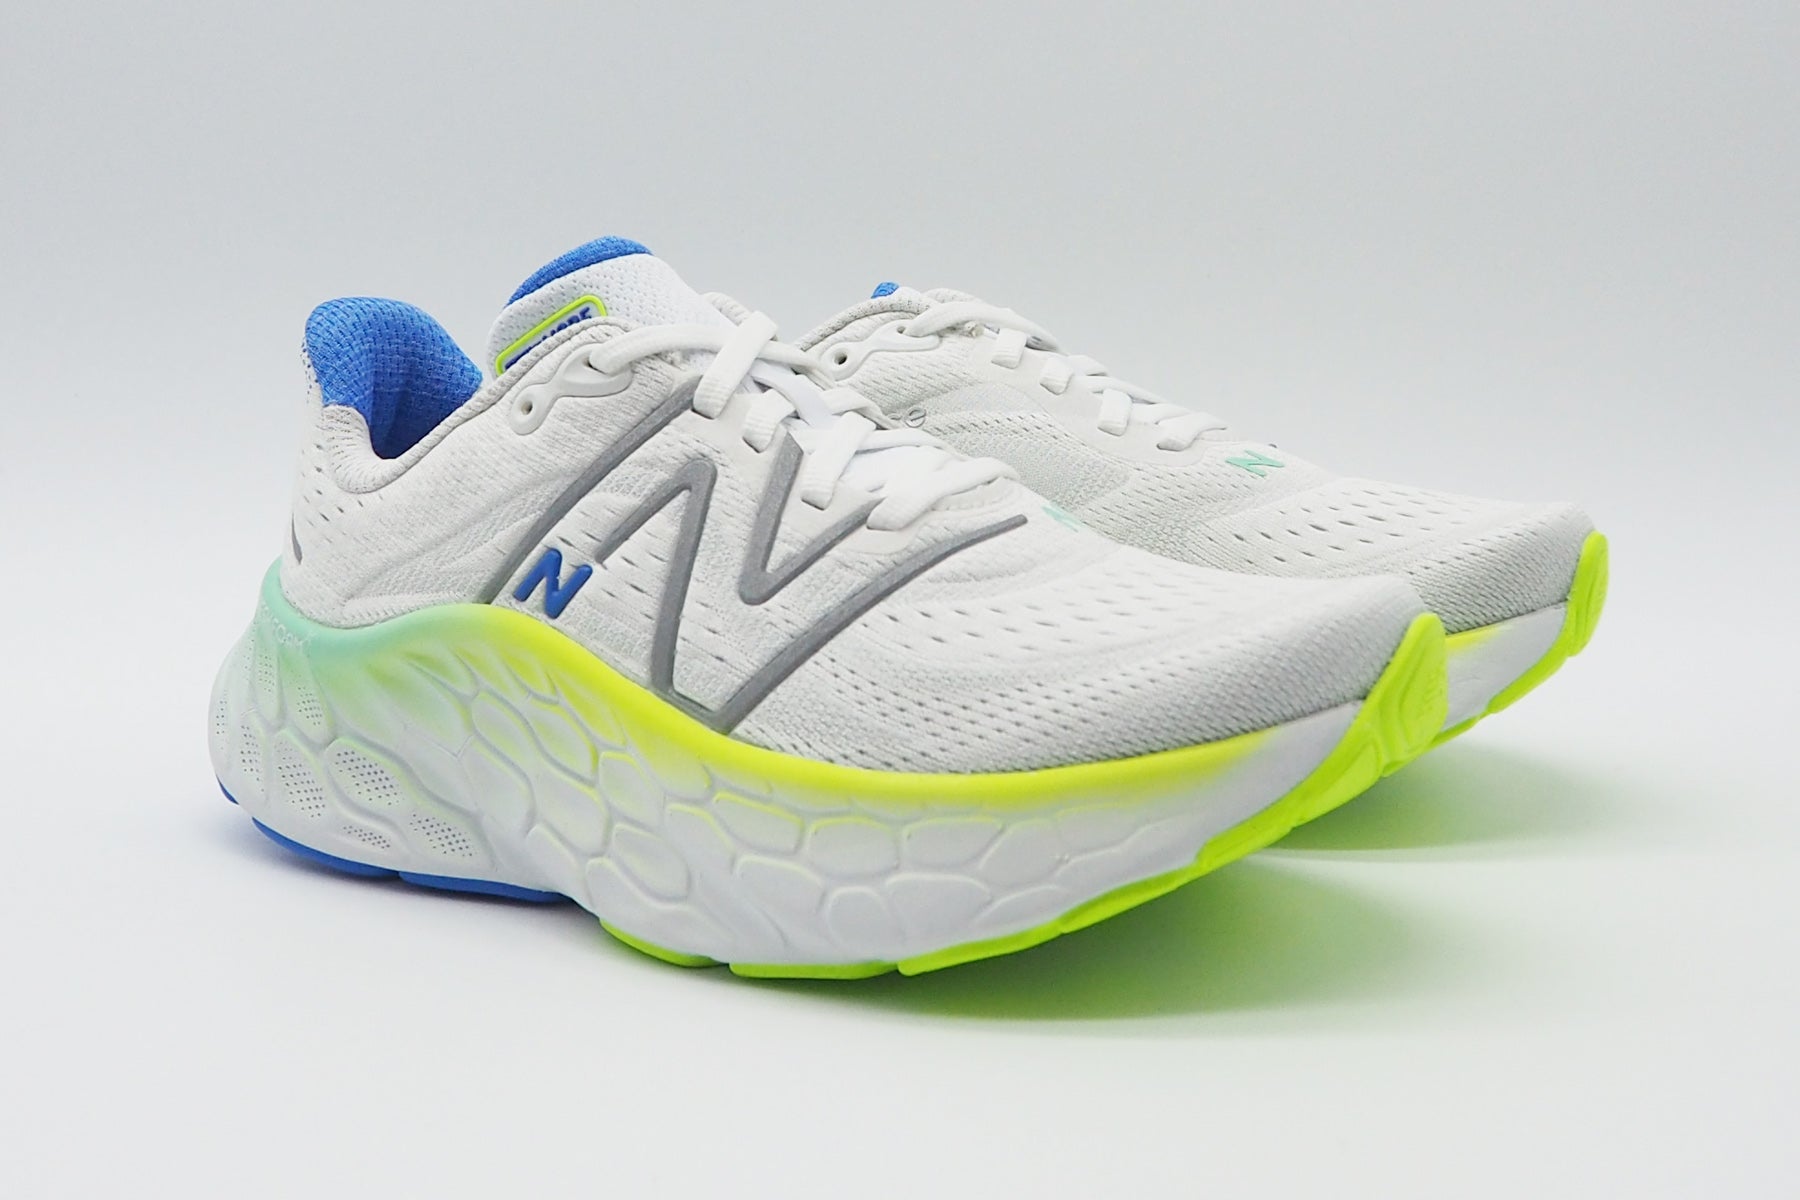 Damen Sneaker "Running Course" WMORWT4 aus Mesh in Weiß & Fluor-Neon Damen Sneaker New Balance 